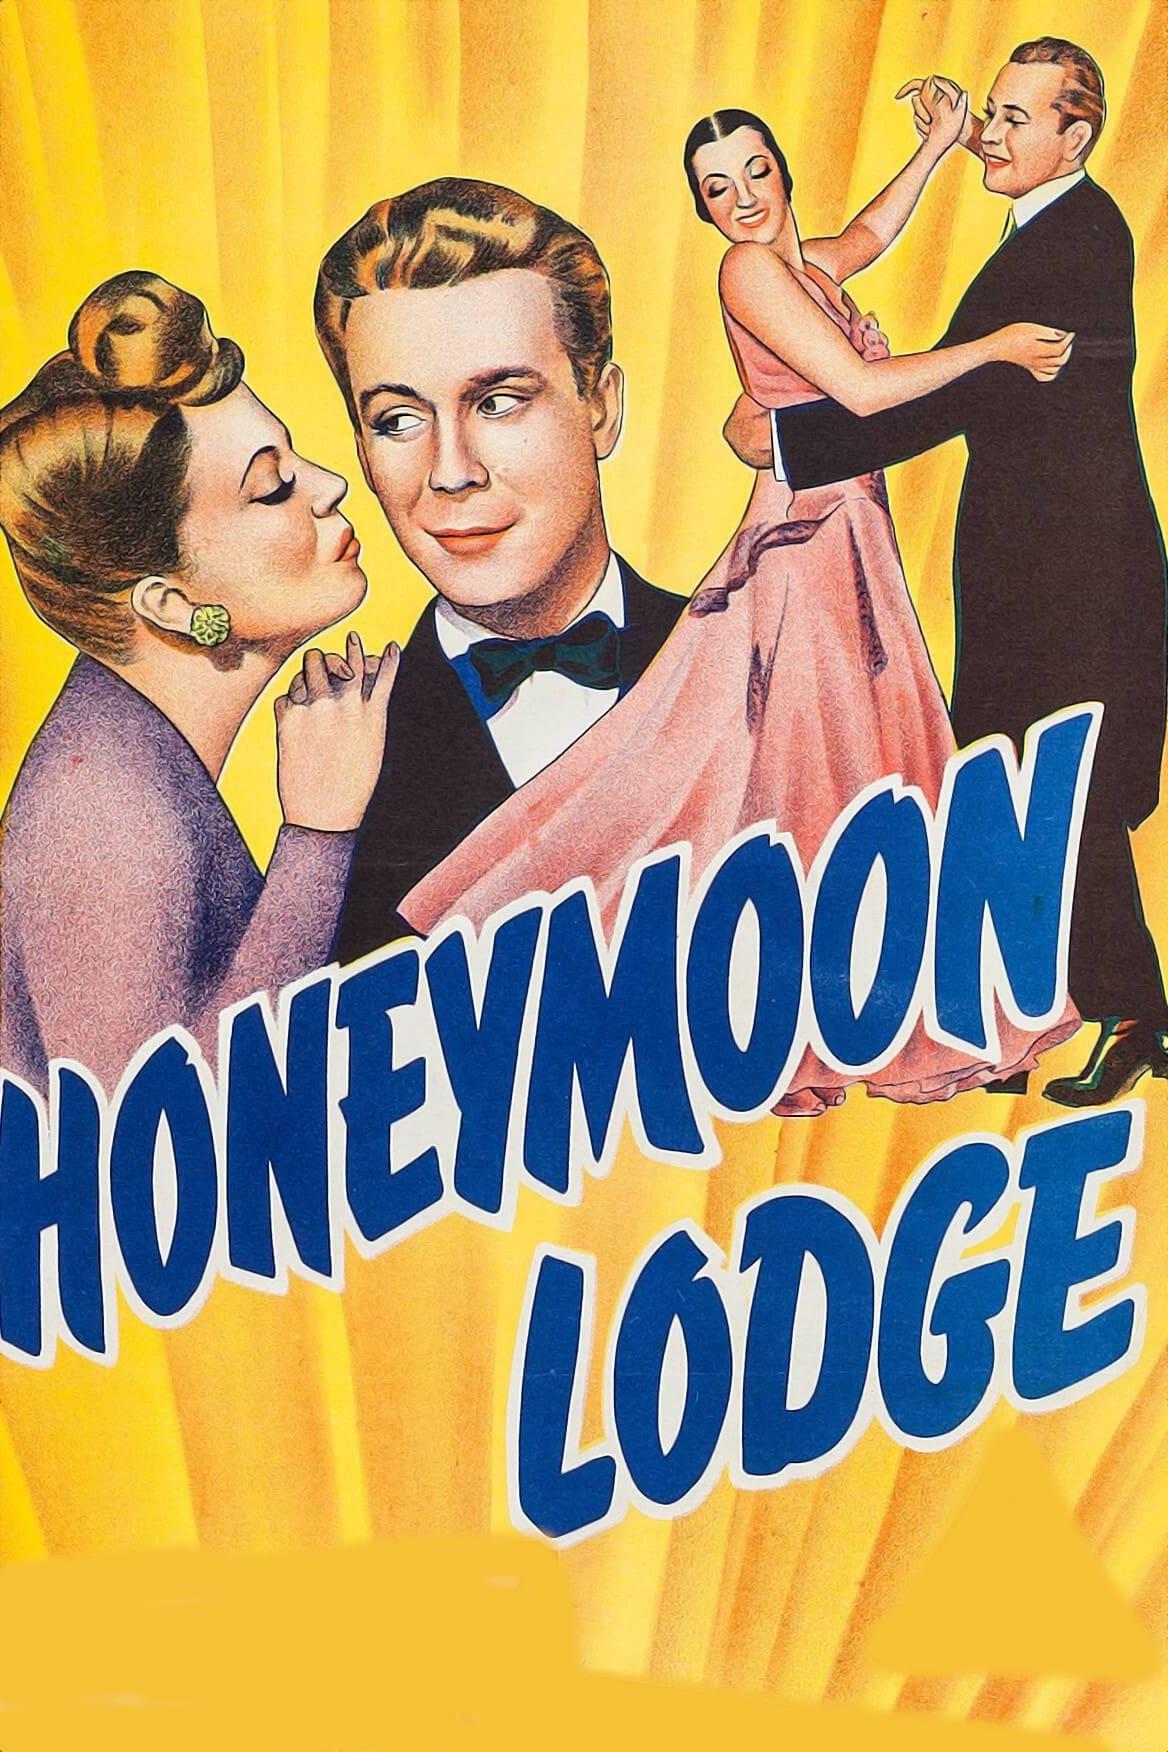 Honeymoon Lodge poster